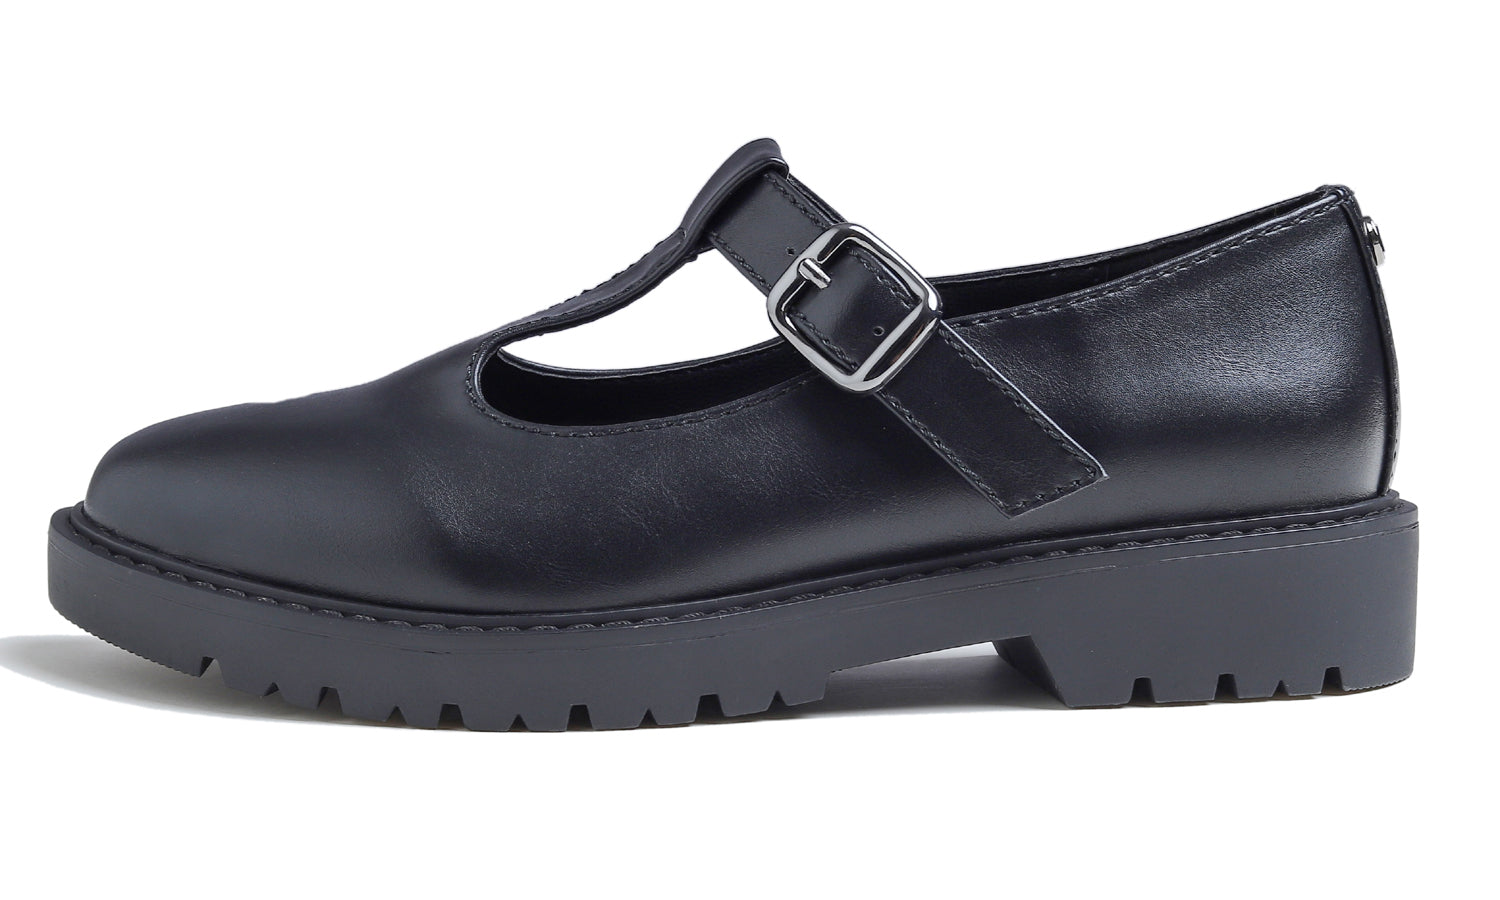 Feversole Women's Fashion Trim Deco Loafer Flats Black Vegan Leather Mary Jane Buckle